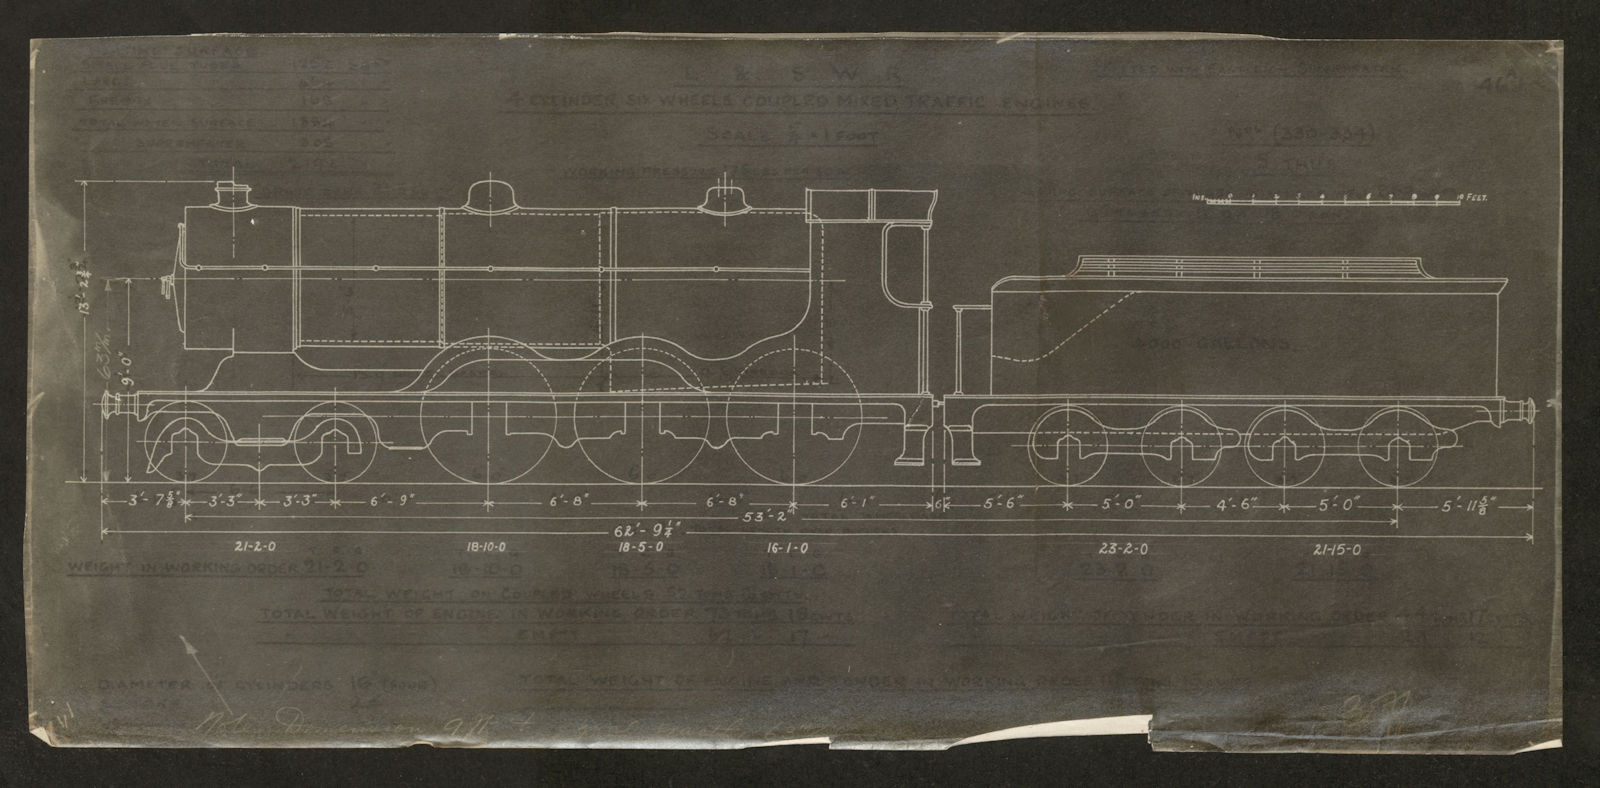 4-6-0 locomotive drawing L&SWR 4 cylinder Nos 330-334 Engineering plan c1920